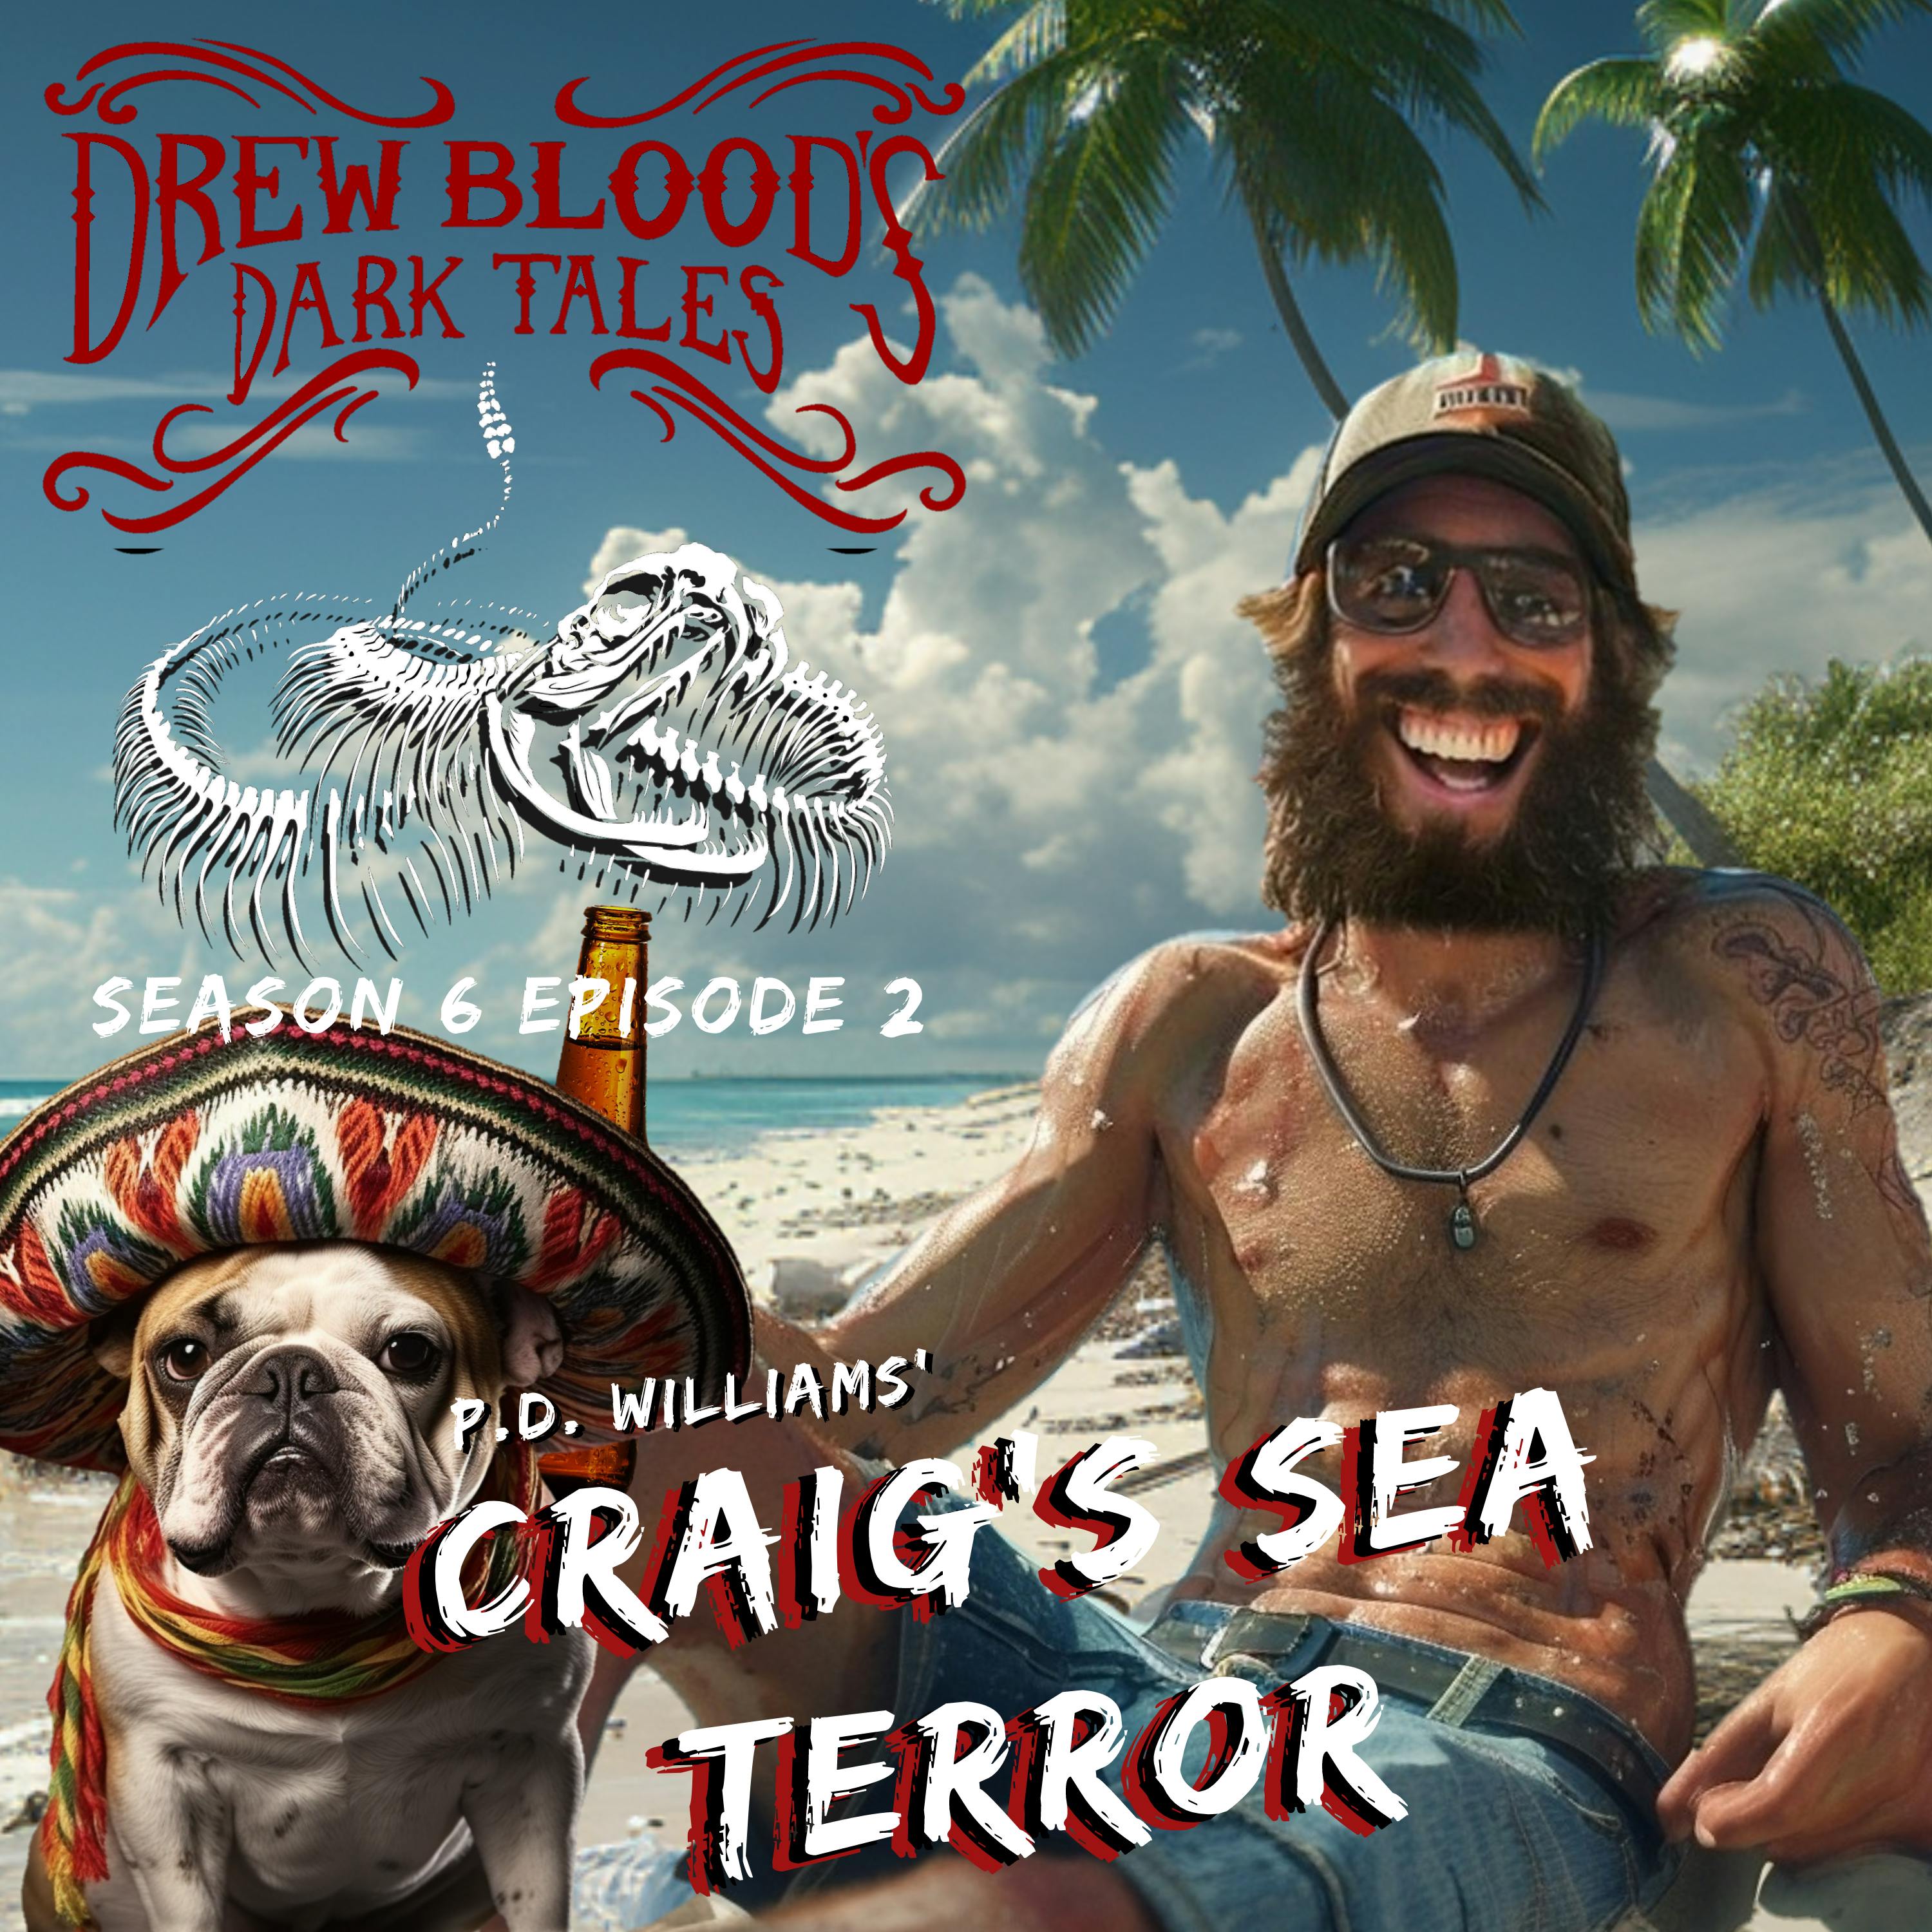 S6E02 - "Craig’s Sea Terror: Part One" - Drew Blood